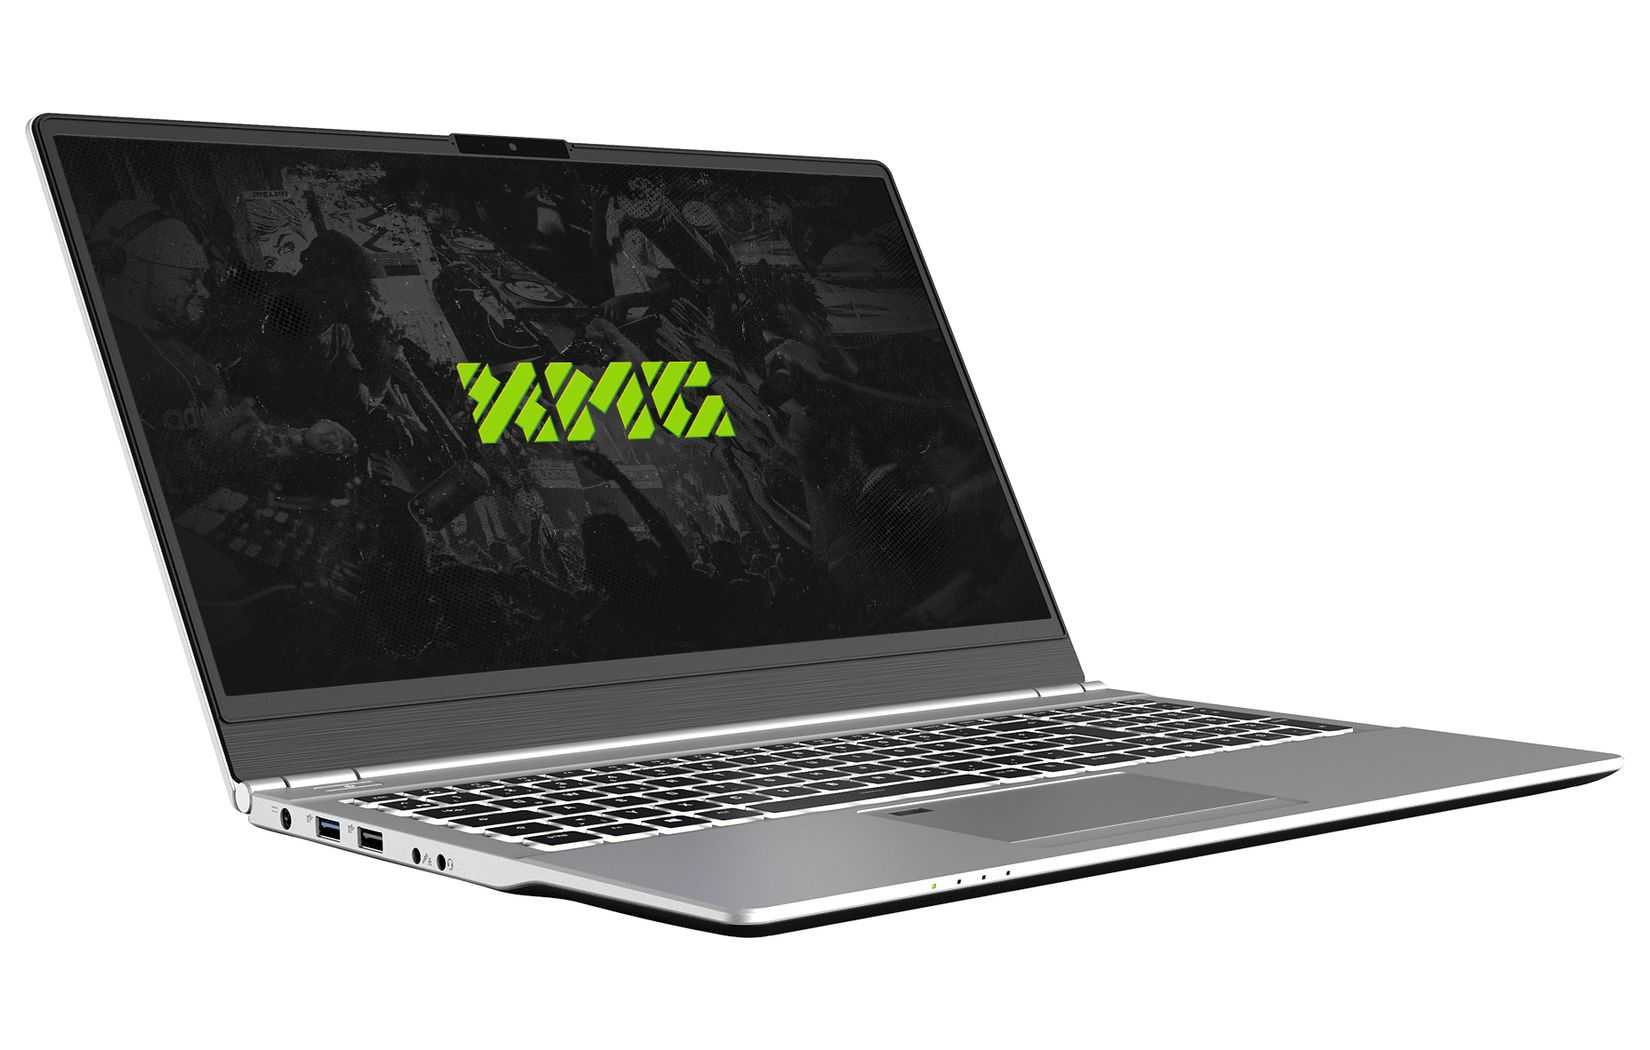 XMG DJ 15 Review The laptop designed for DJs